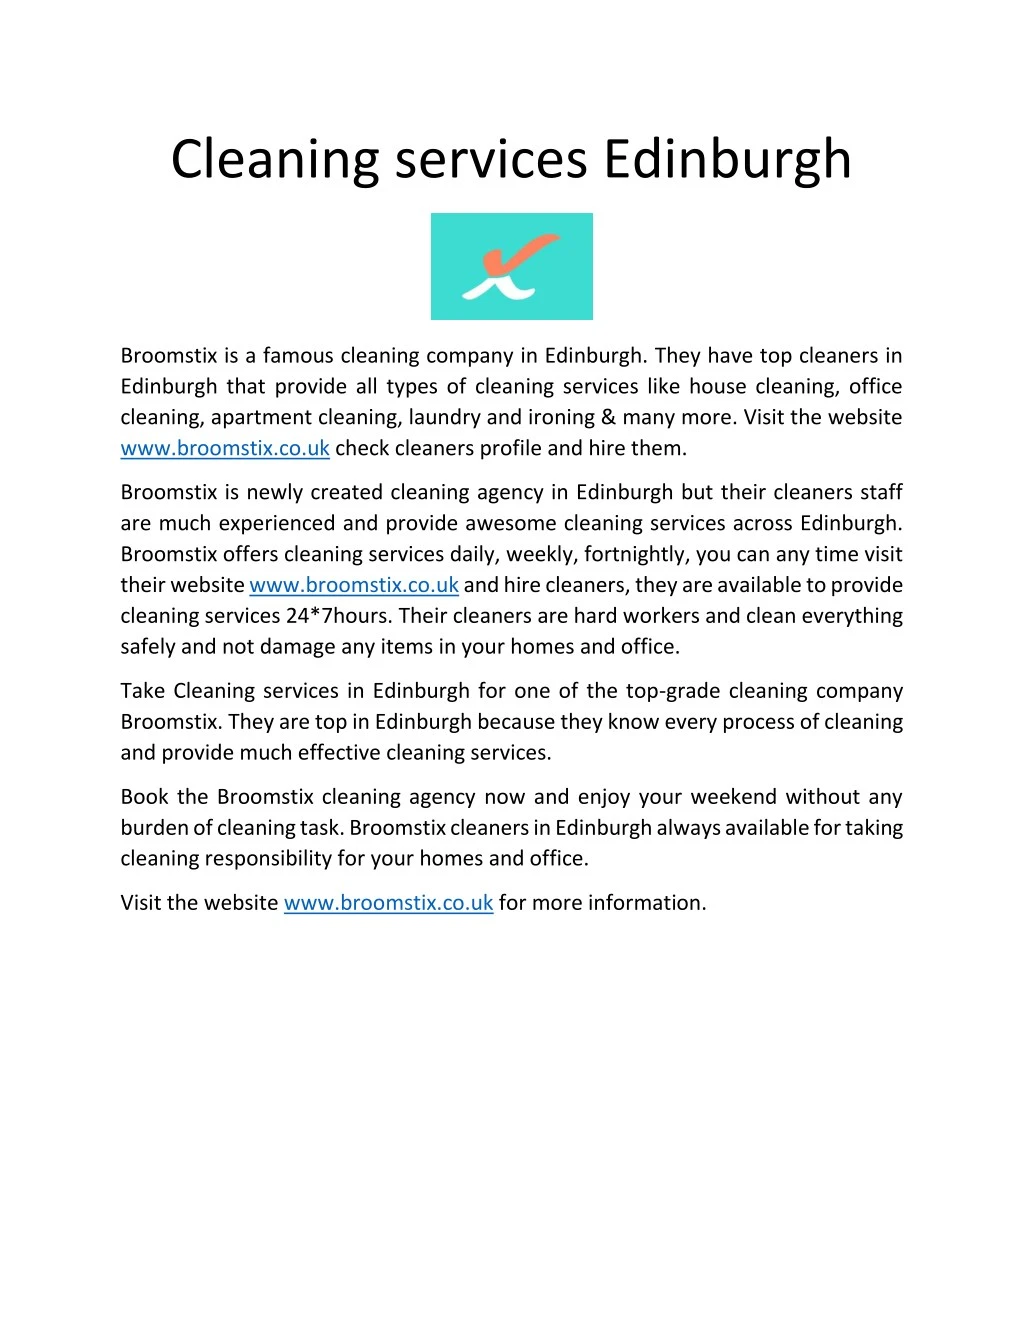 cleaning services edinburgh